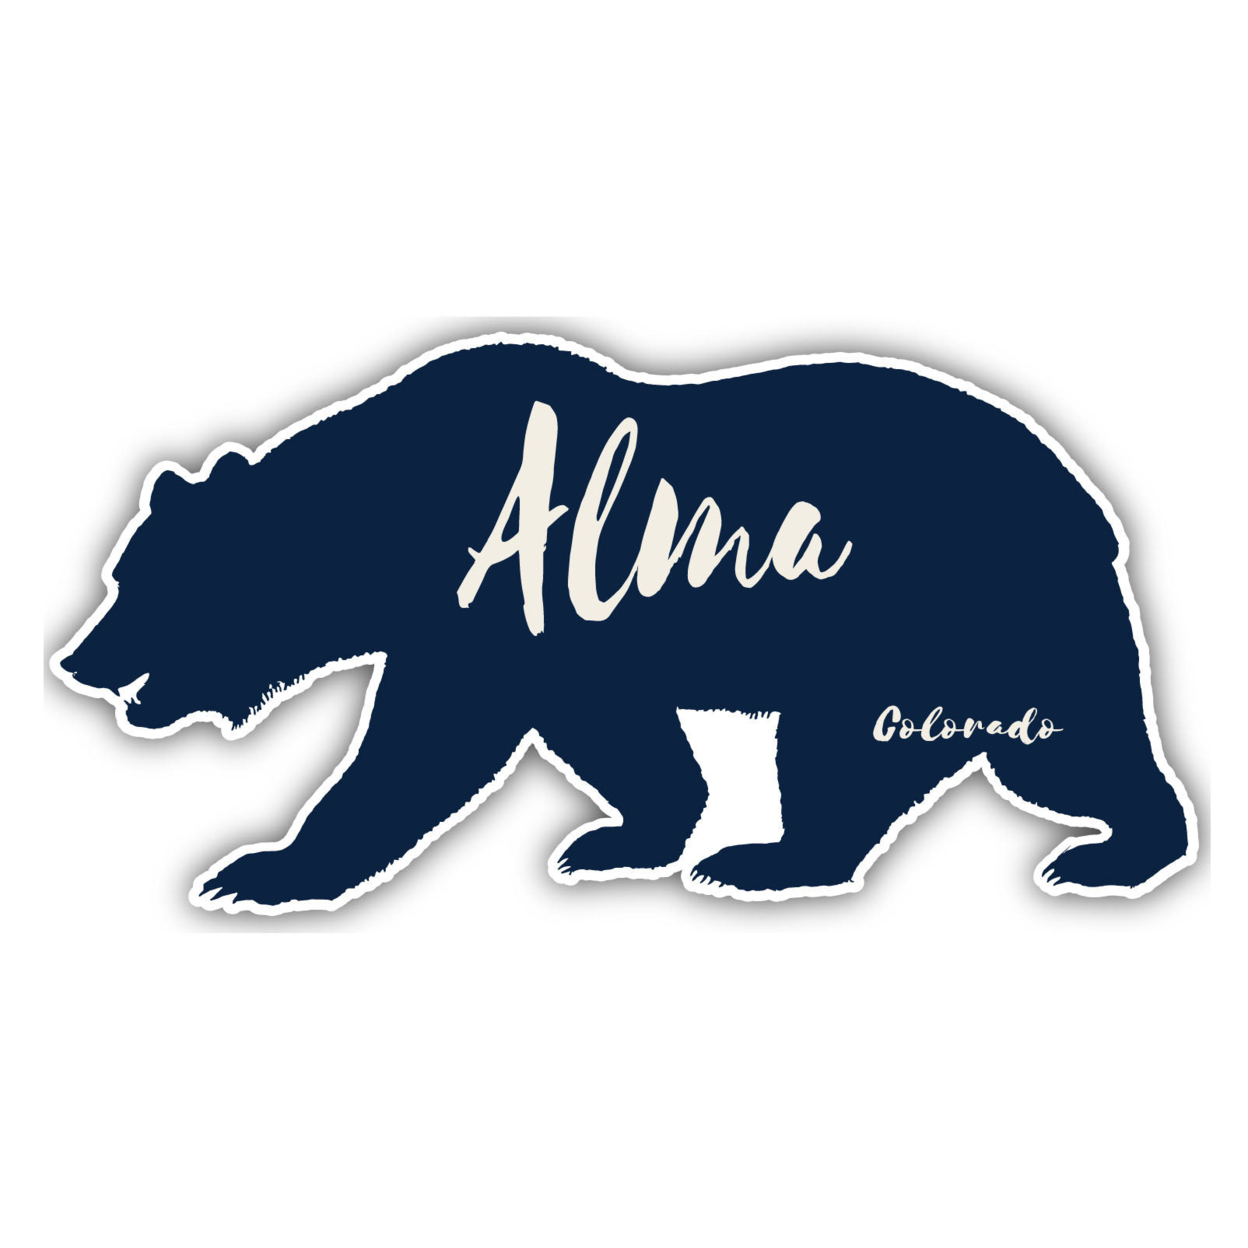 Alma Colorado Souvenir Decorative Stickers (Choose Theme And Size) - Single Unit, 10-Inch, Tent